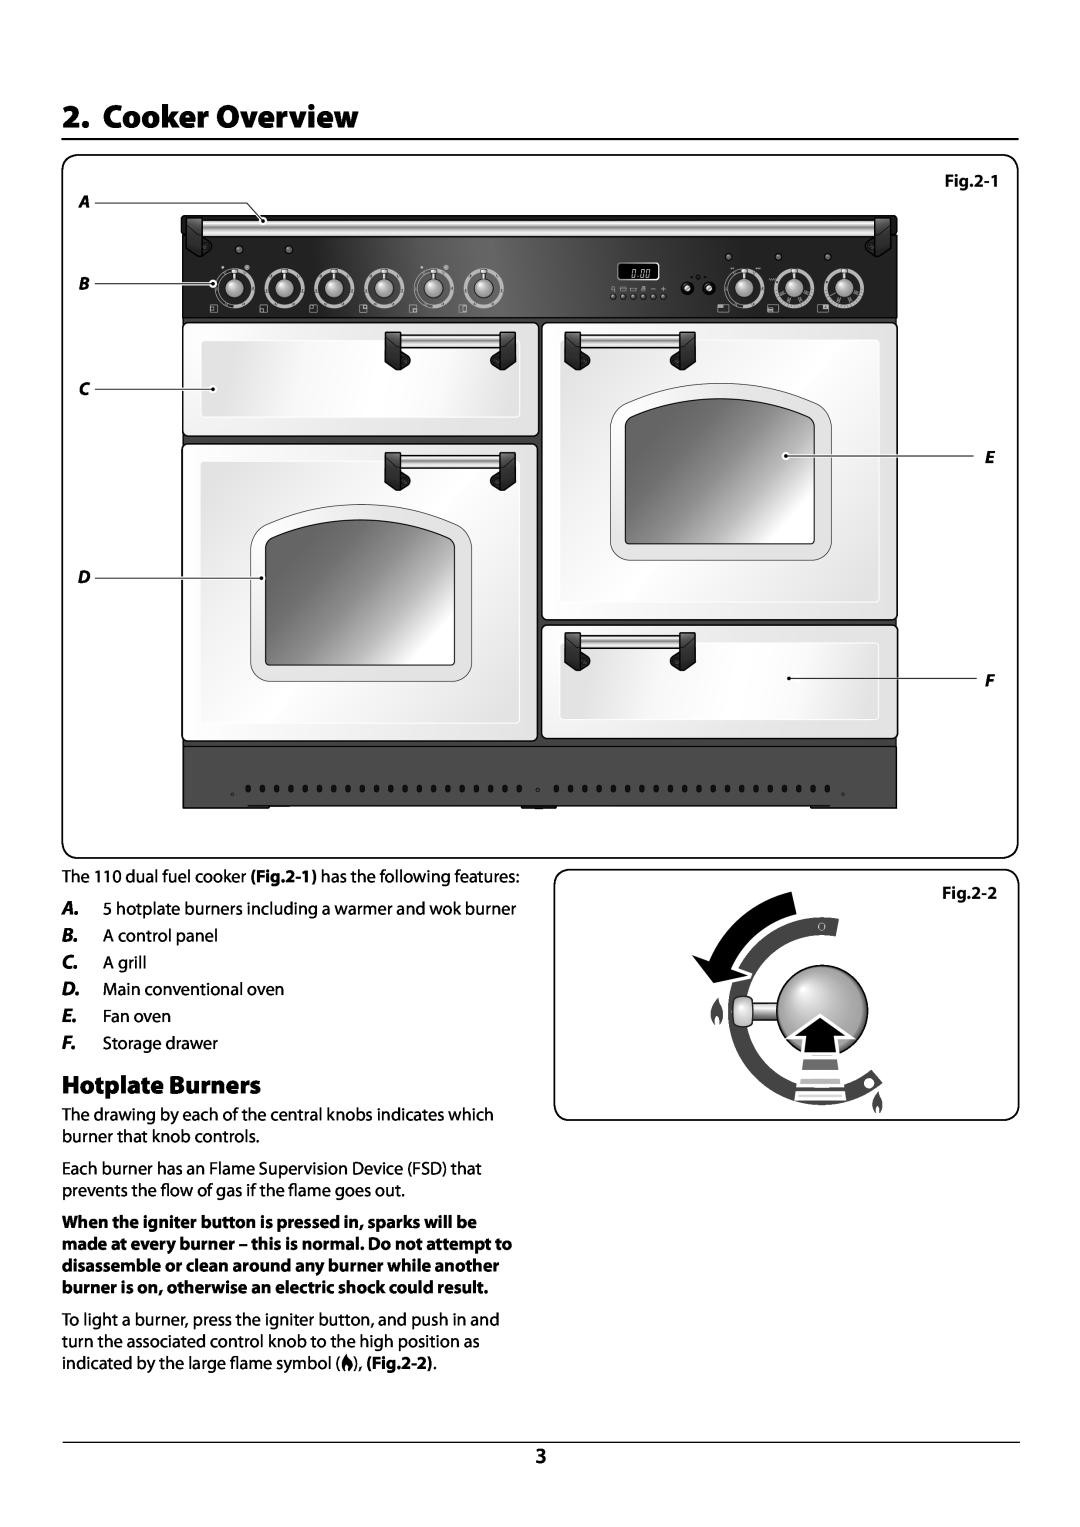 JVC toledo installation instructions Cooker Overview, Hotplate Burners, 1, B C E D F 